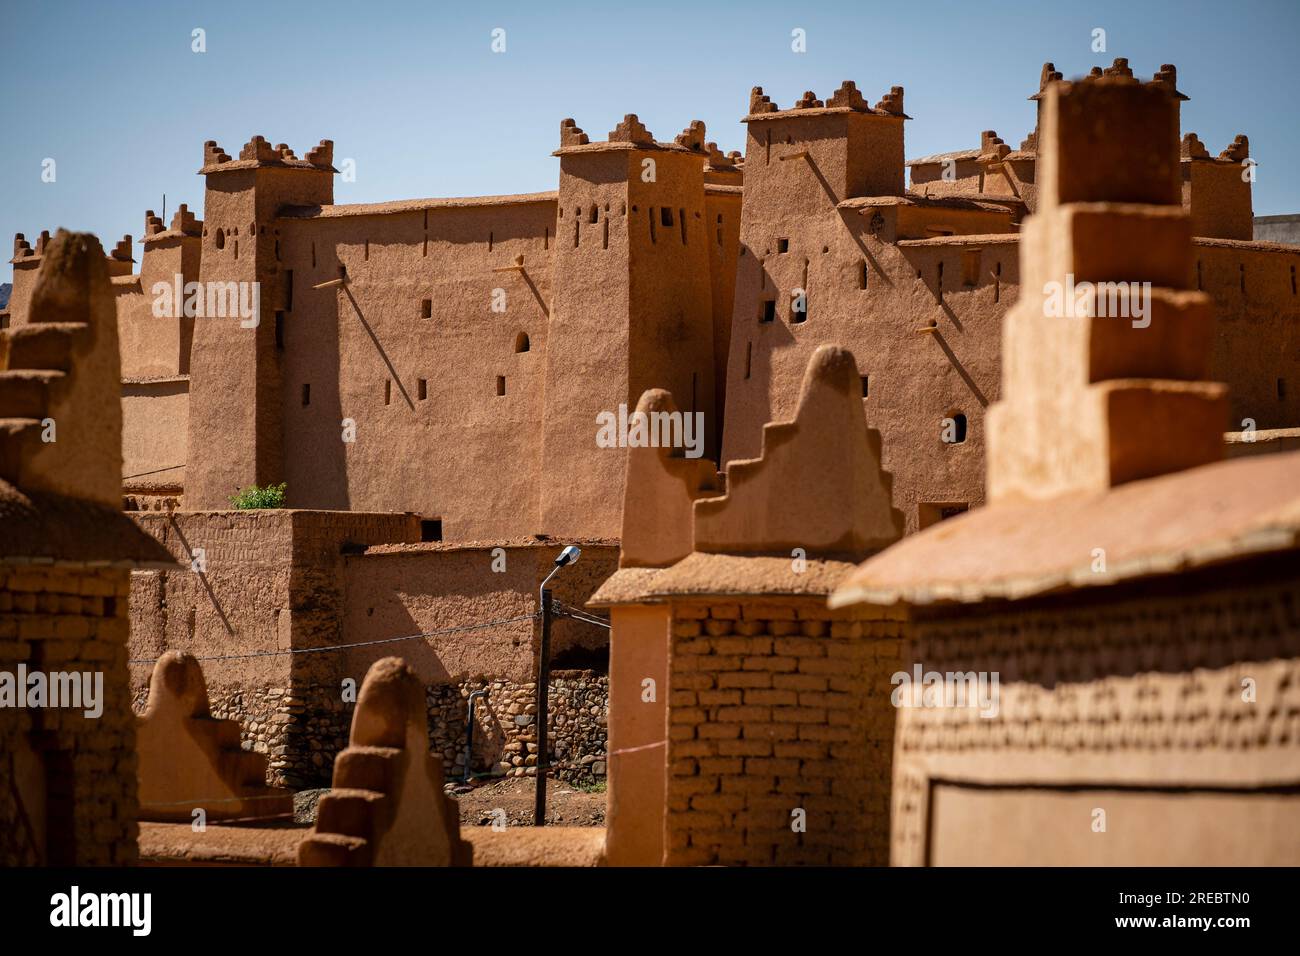 Nkob, adobe buildings, Marruecos, North Africa Stock Photo